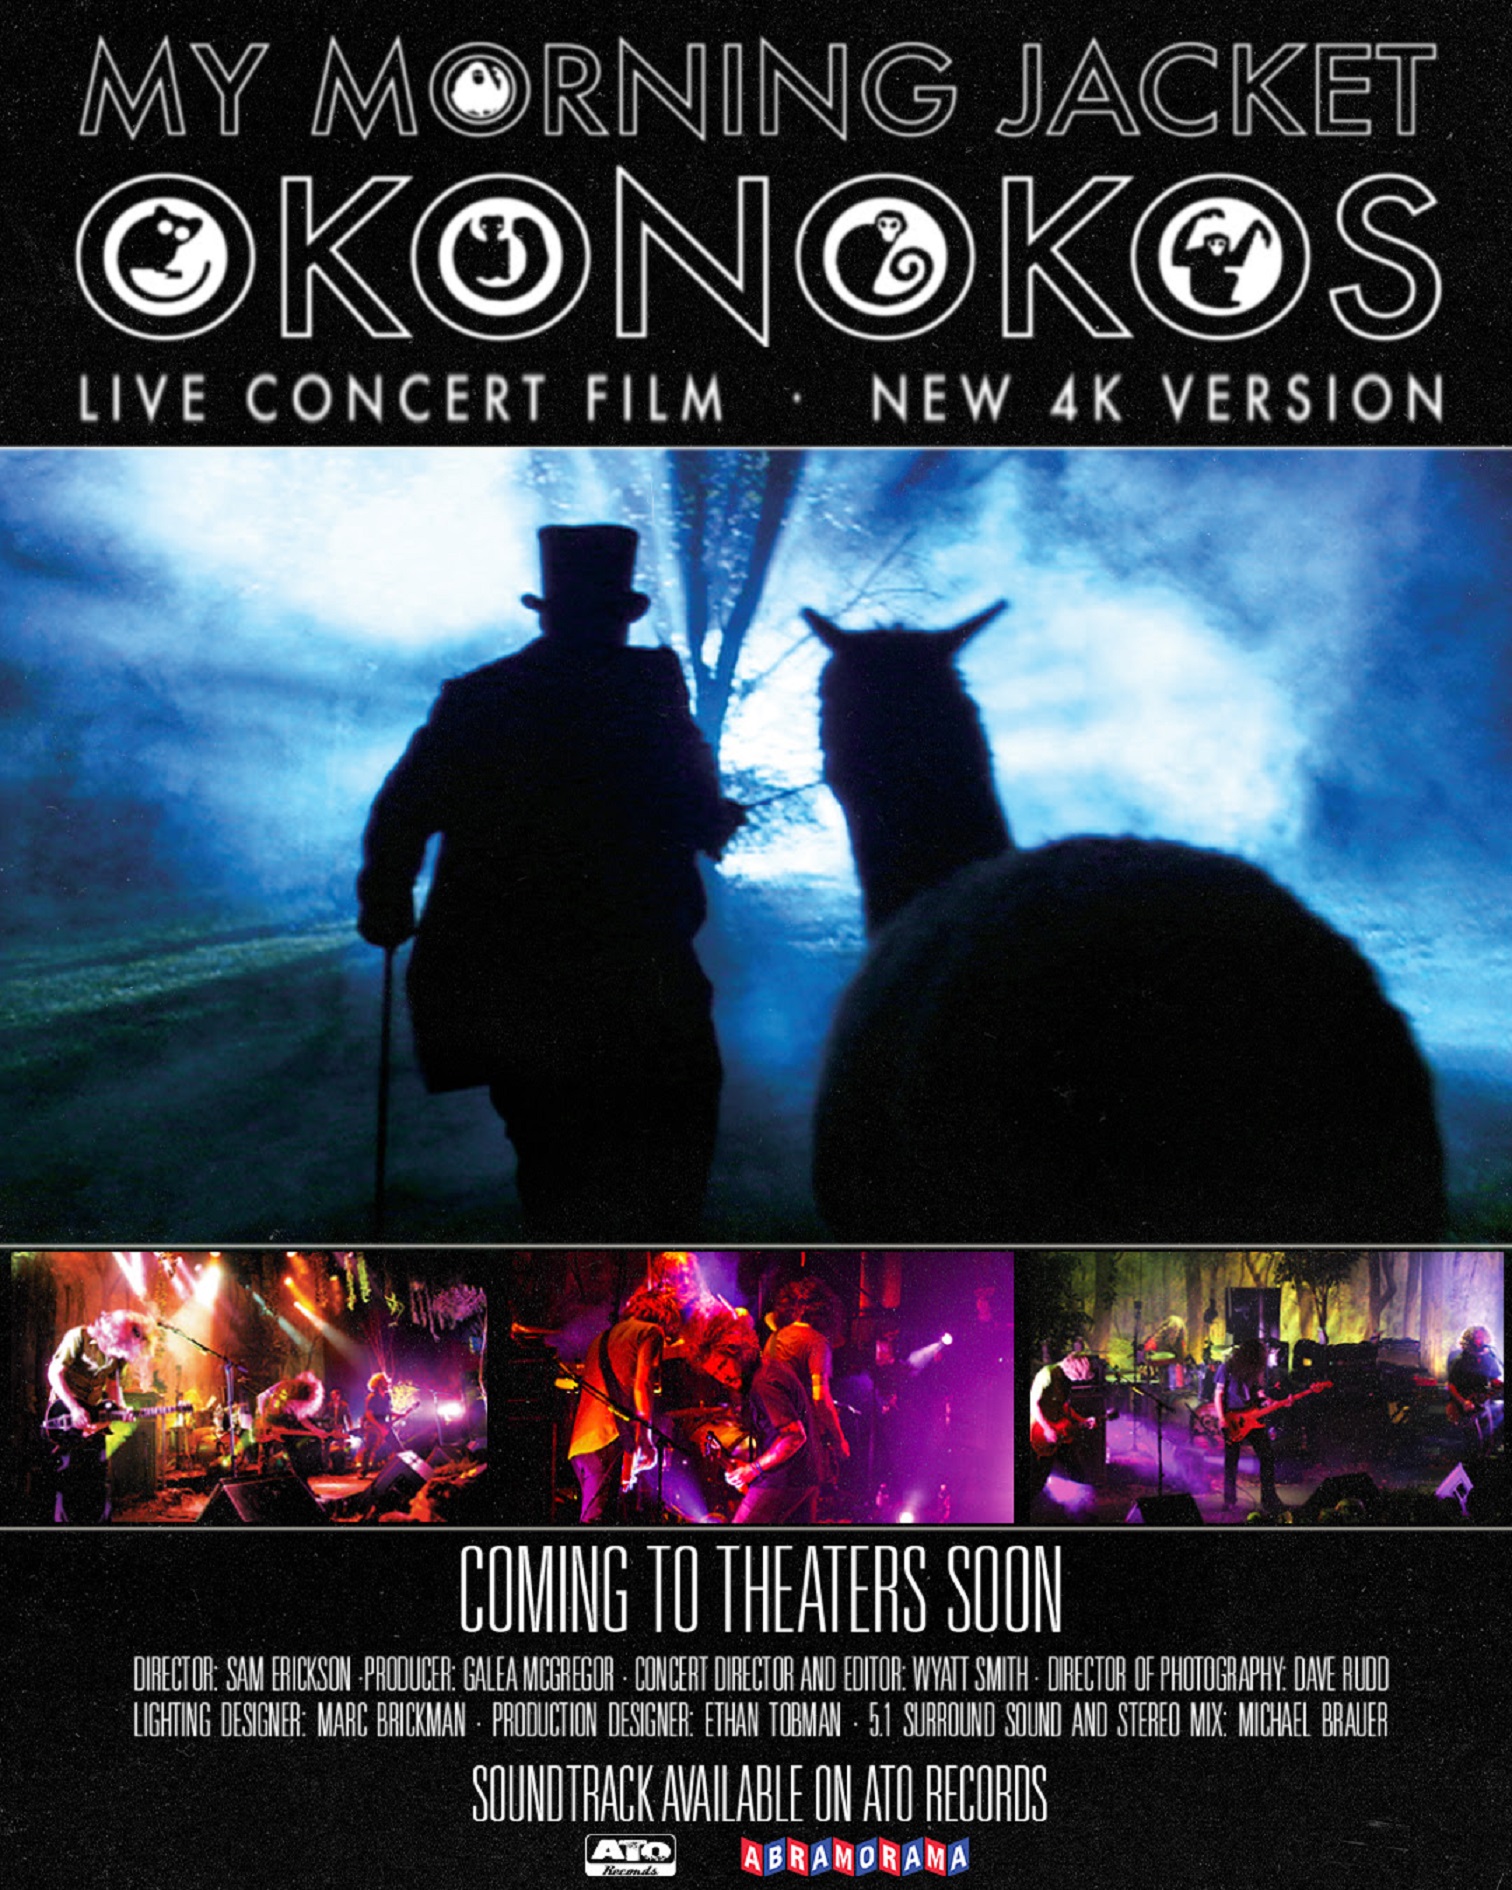 My Morning Jacket Release New 4K Version Of Acclaimed Concert Film "Okonokos"